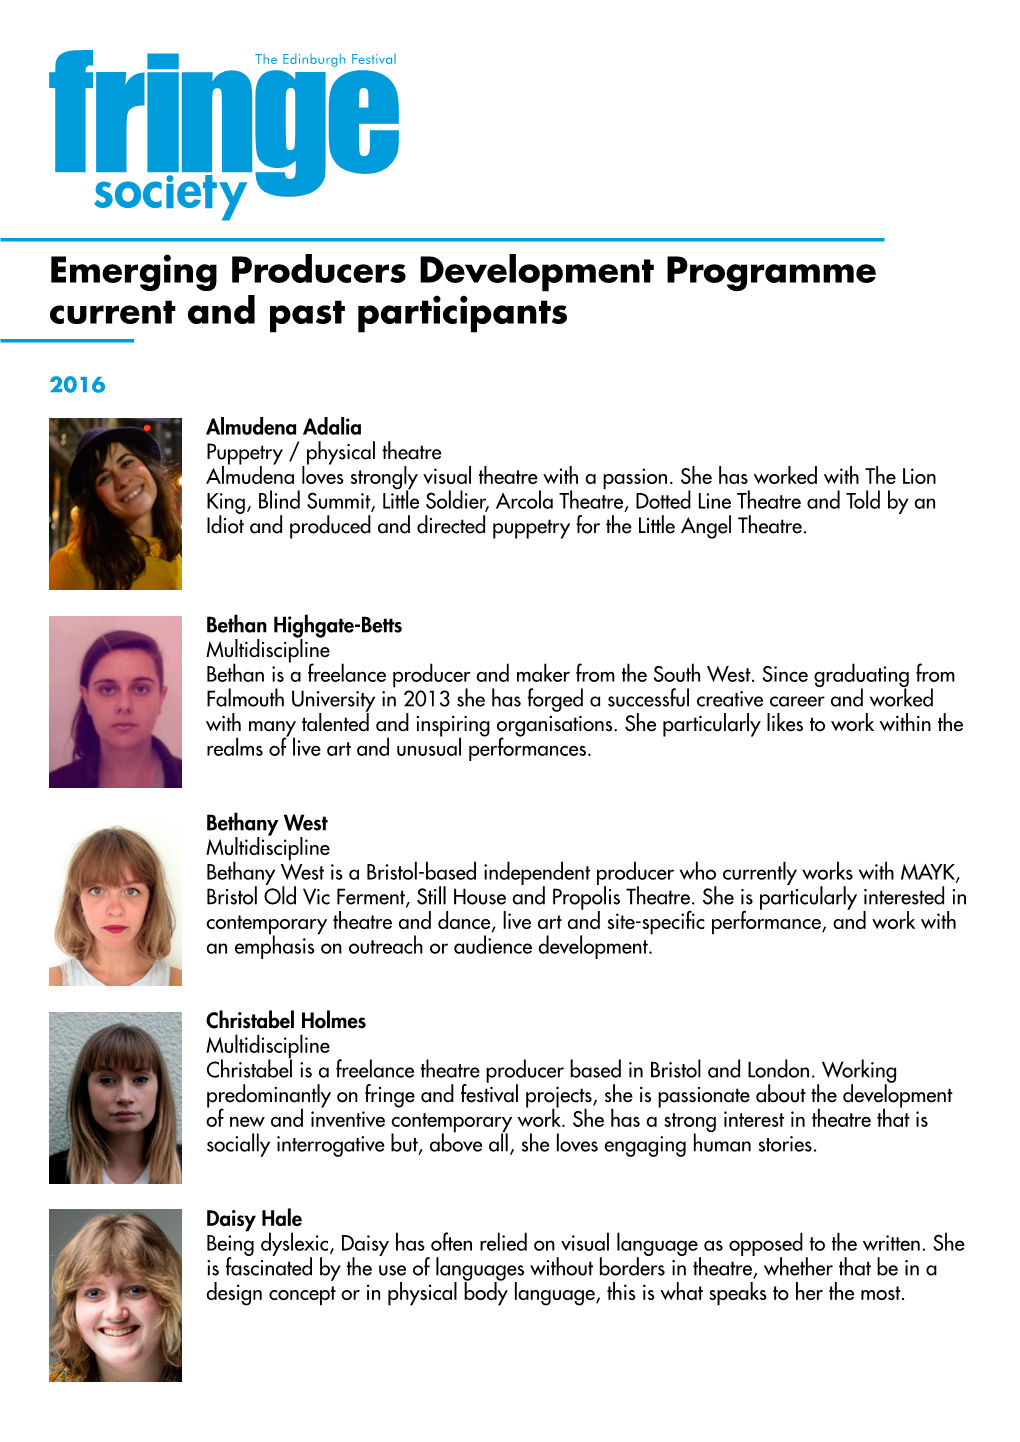 Emerging Producers Development Programme Current and Past Participants